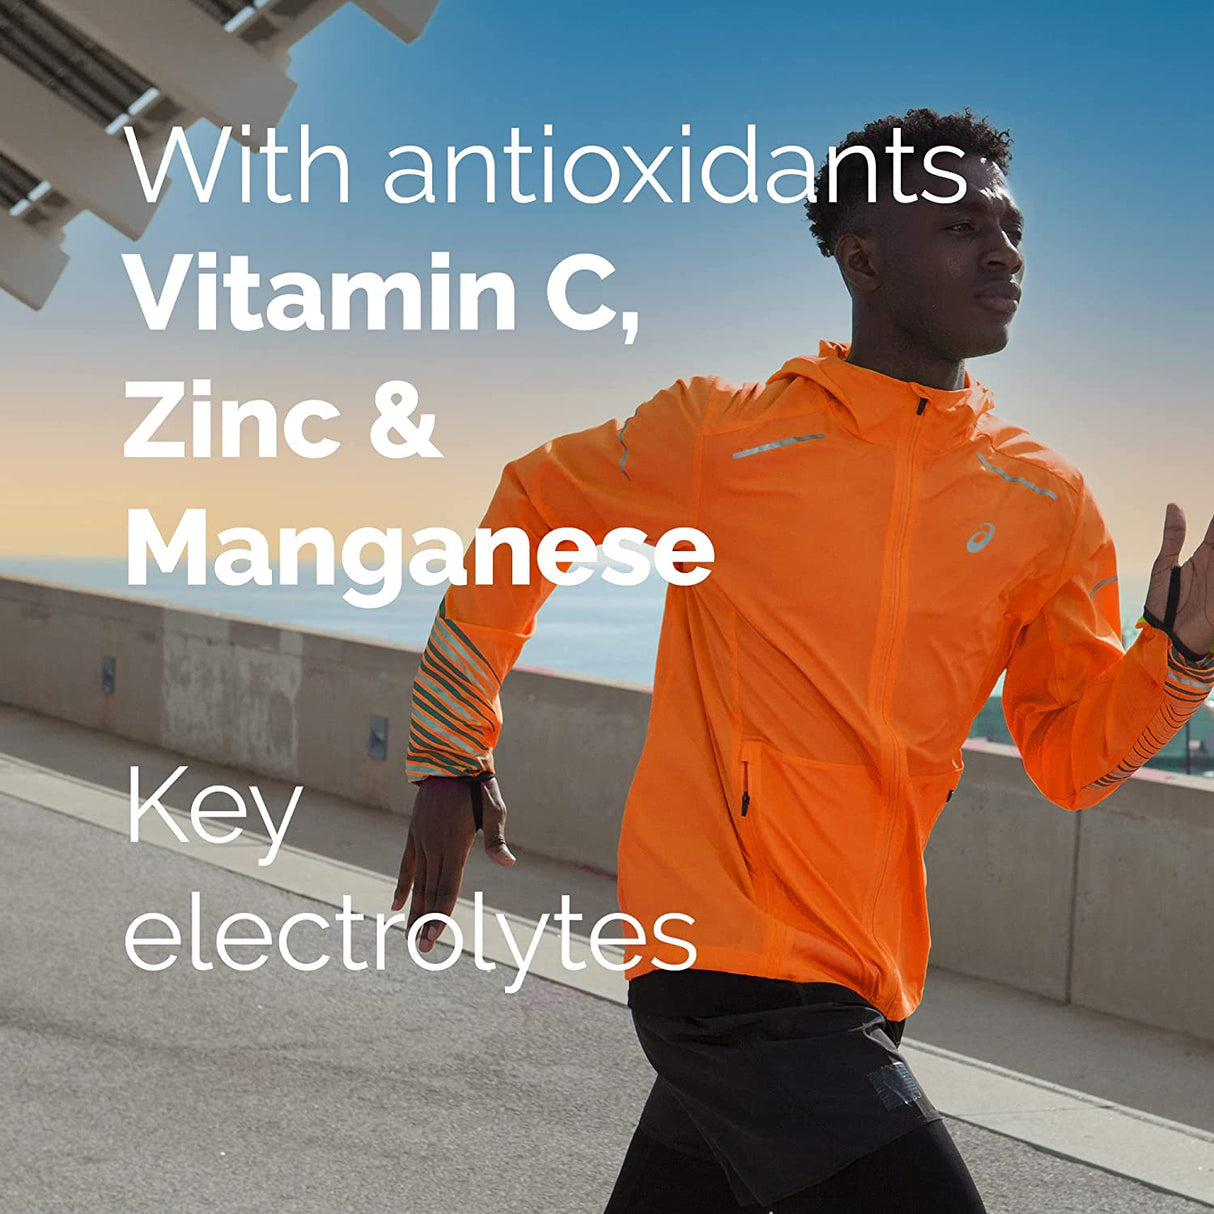 Emergen-C Vitamin C Ashwagandha Drink Mix Powder 18 Sobres